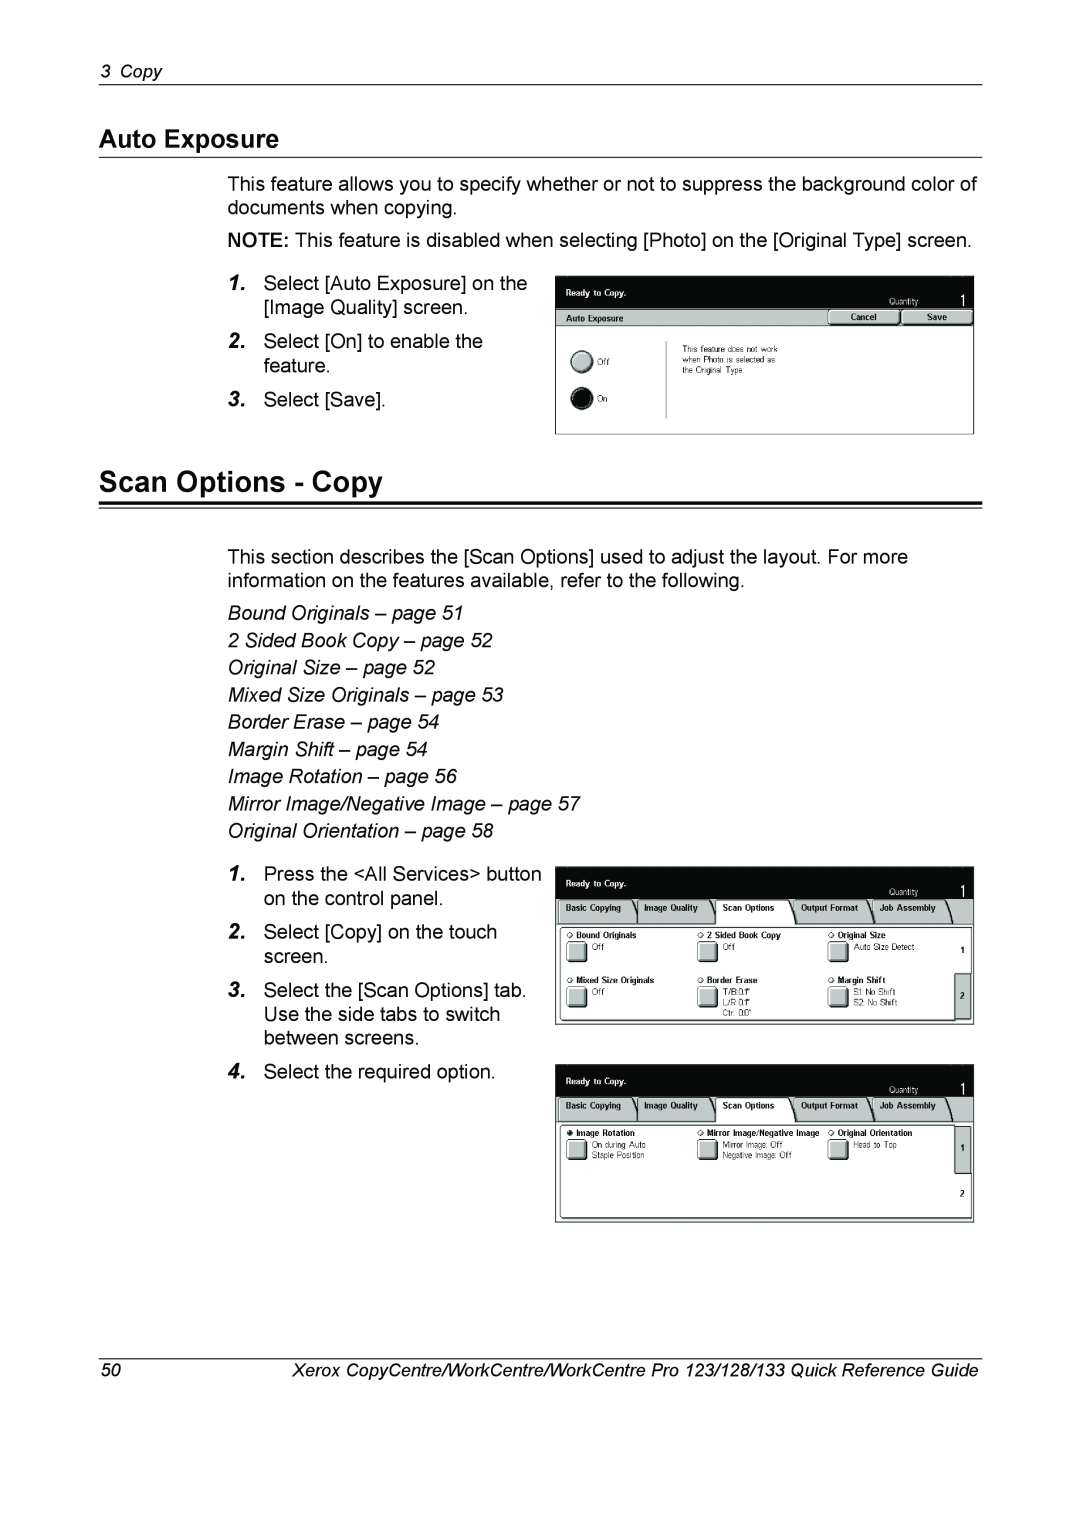 Xerox 604P18037 manual Scan Options - Copy, Auto Exposure, Bound Originals - page 